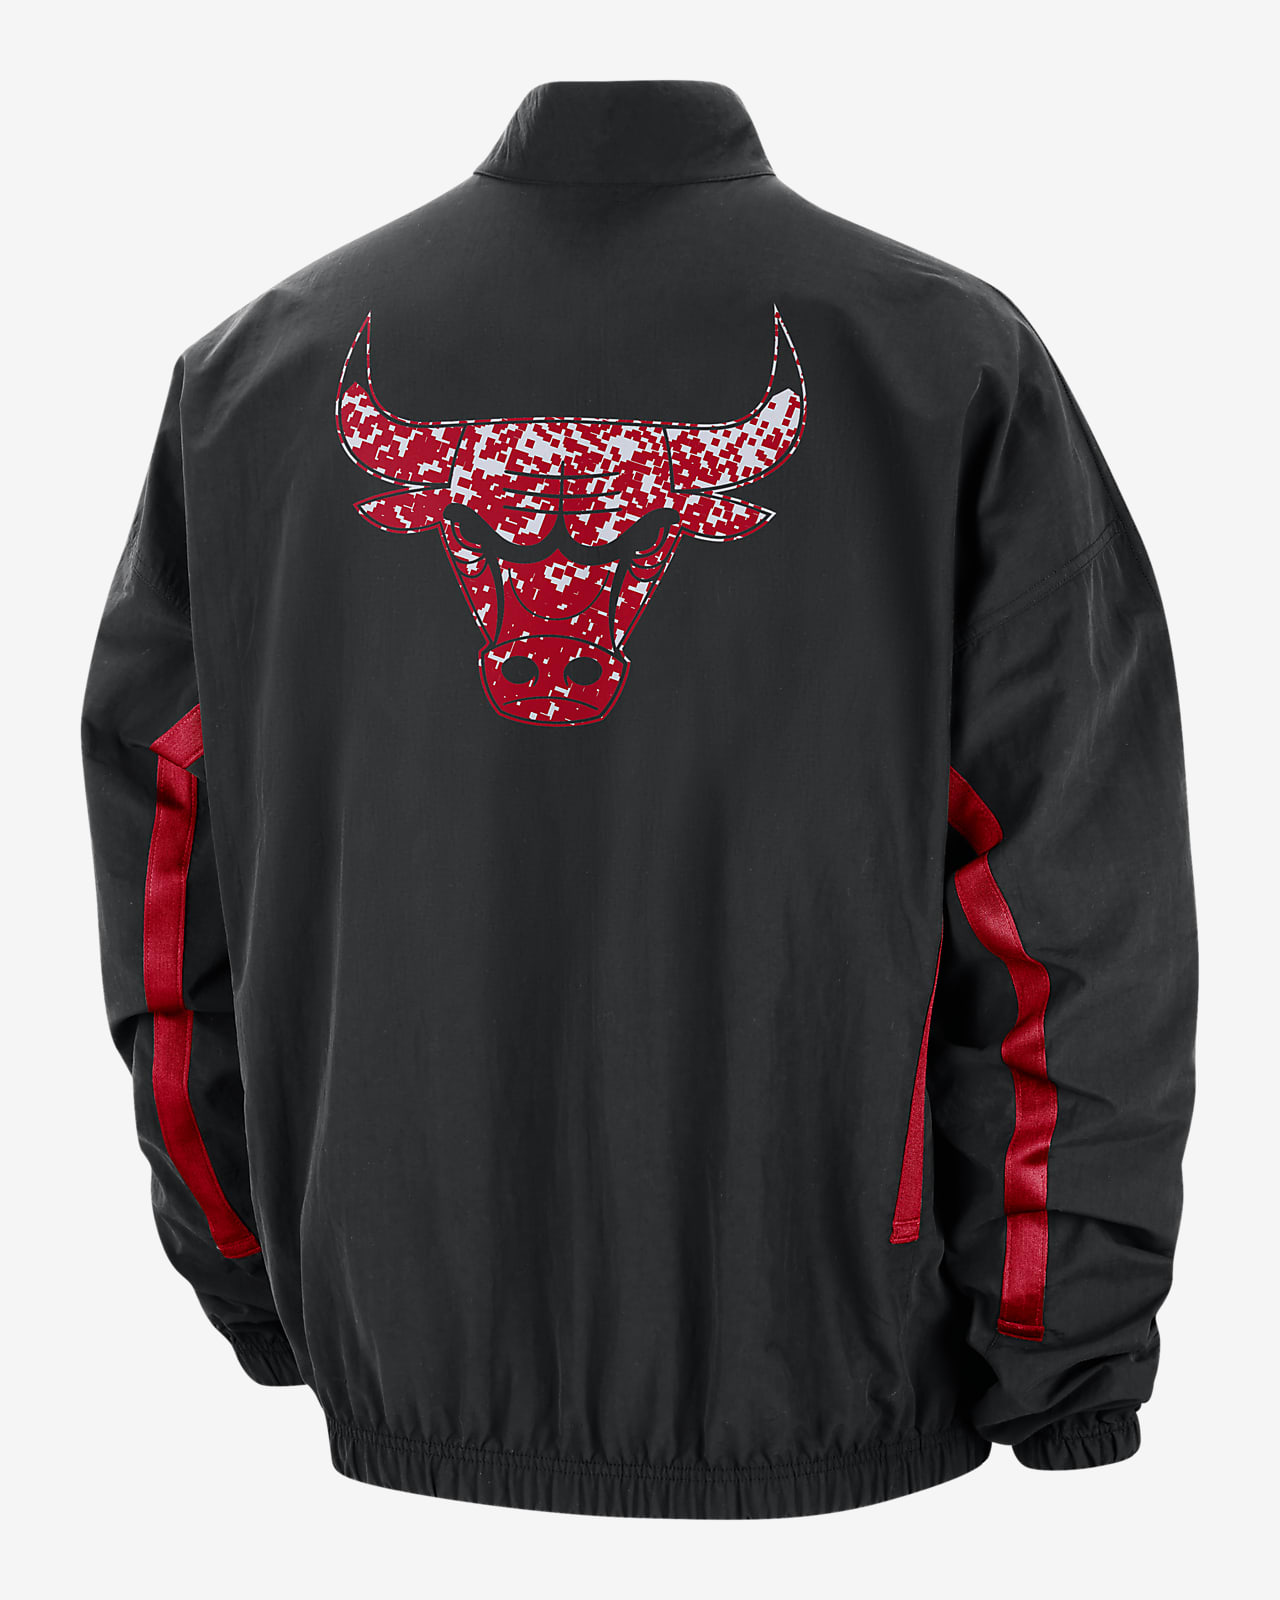 Chicago Bulls DNA Courtside Men's Nike NBA Woven Graphic Jacket.